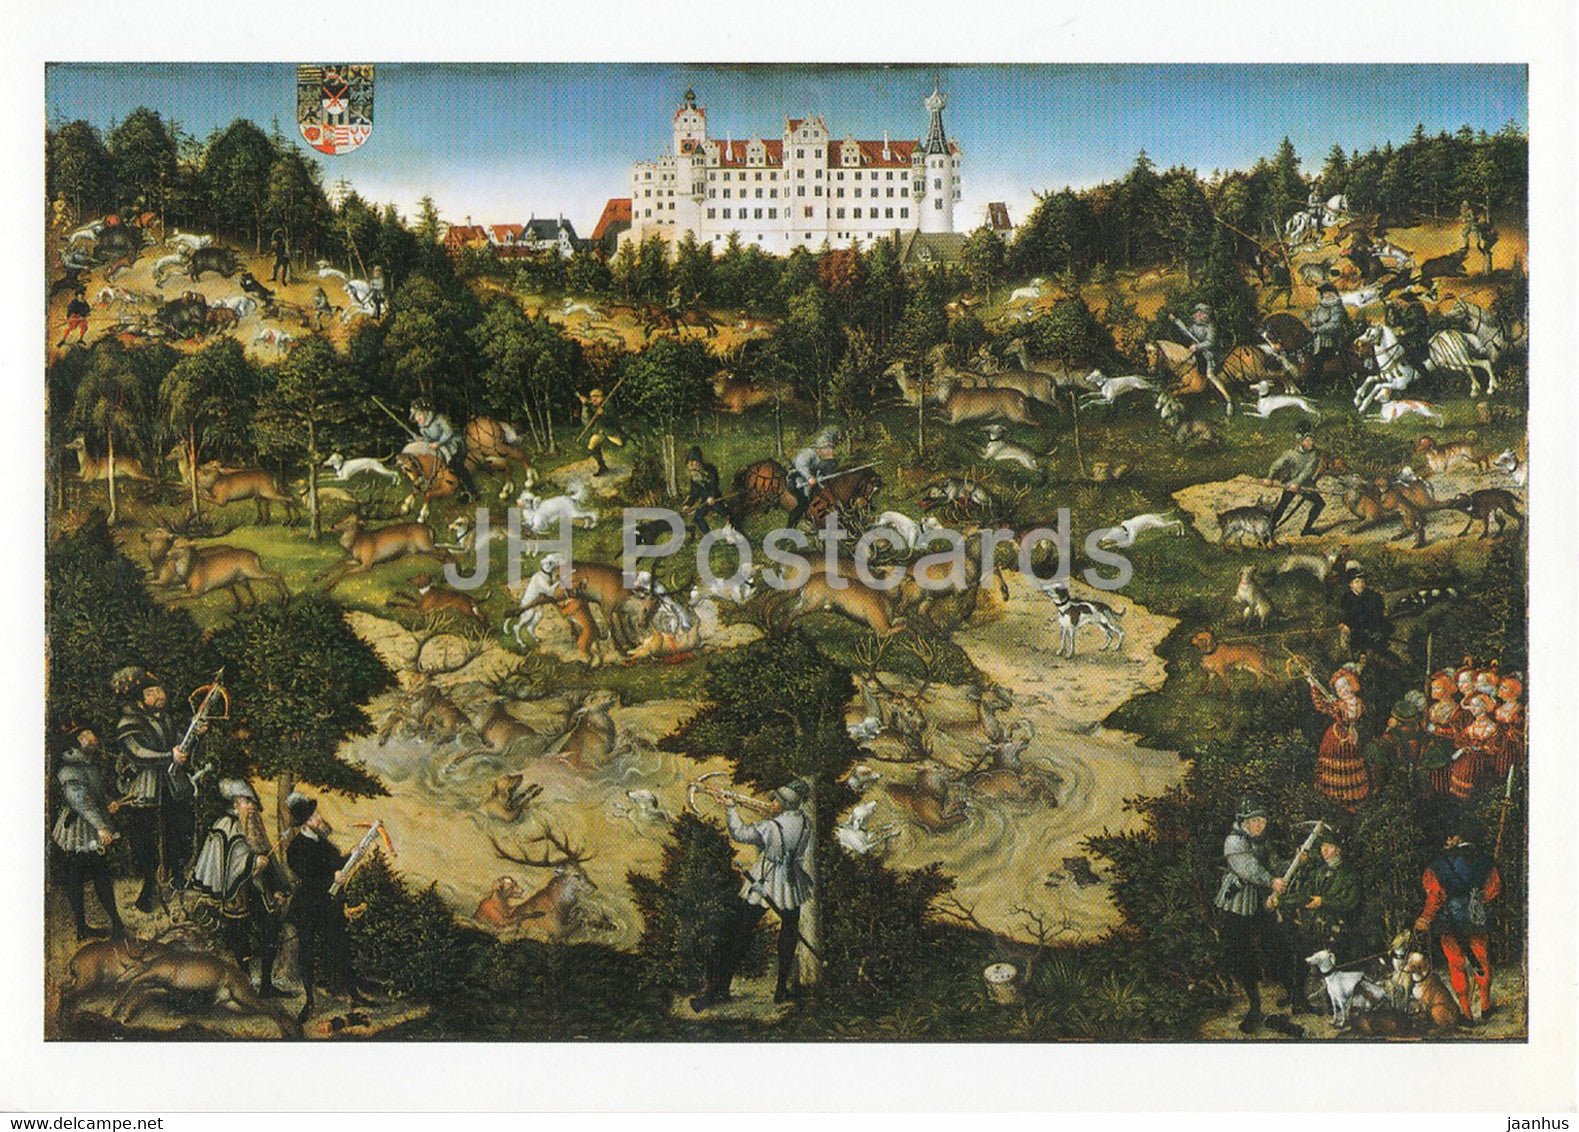 painting by Lucas Cranach - Hirschjagd zu Ehren Kaiser Karls V vor Schloss Hartenfels - German art - Germany - unused - JH Postcards